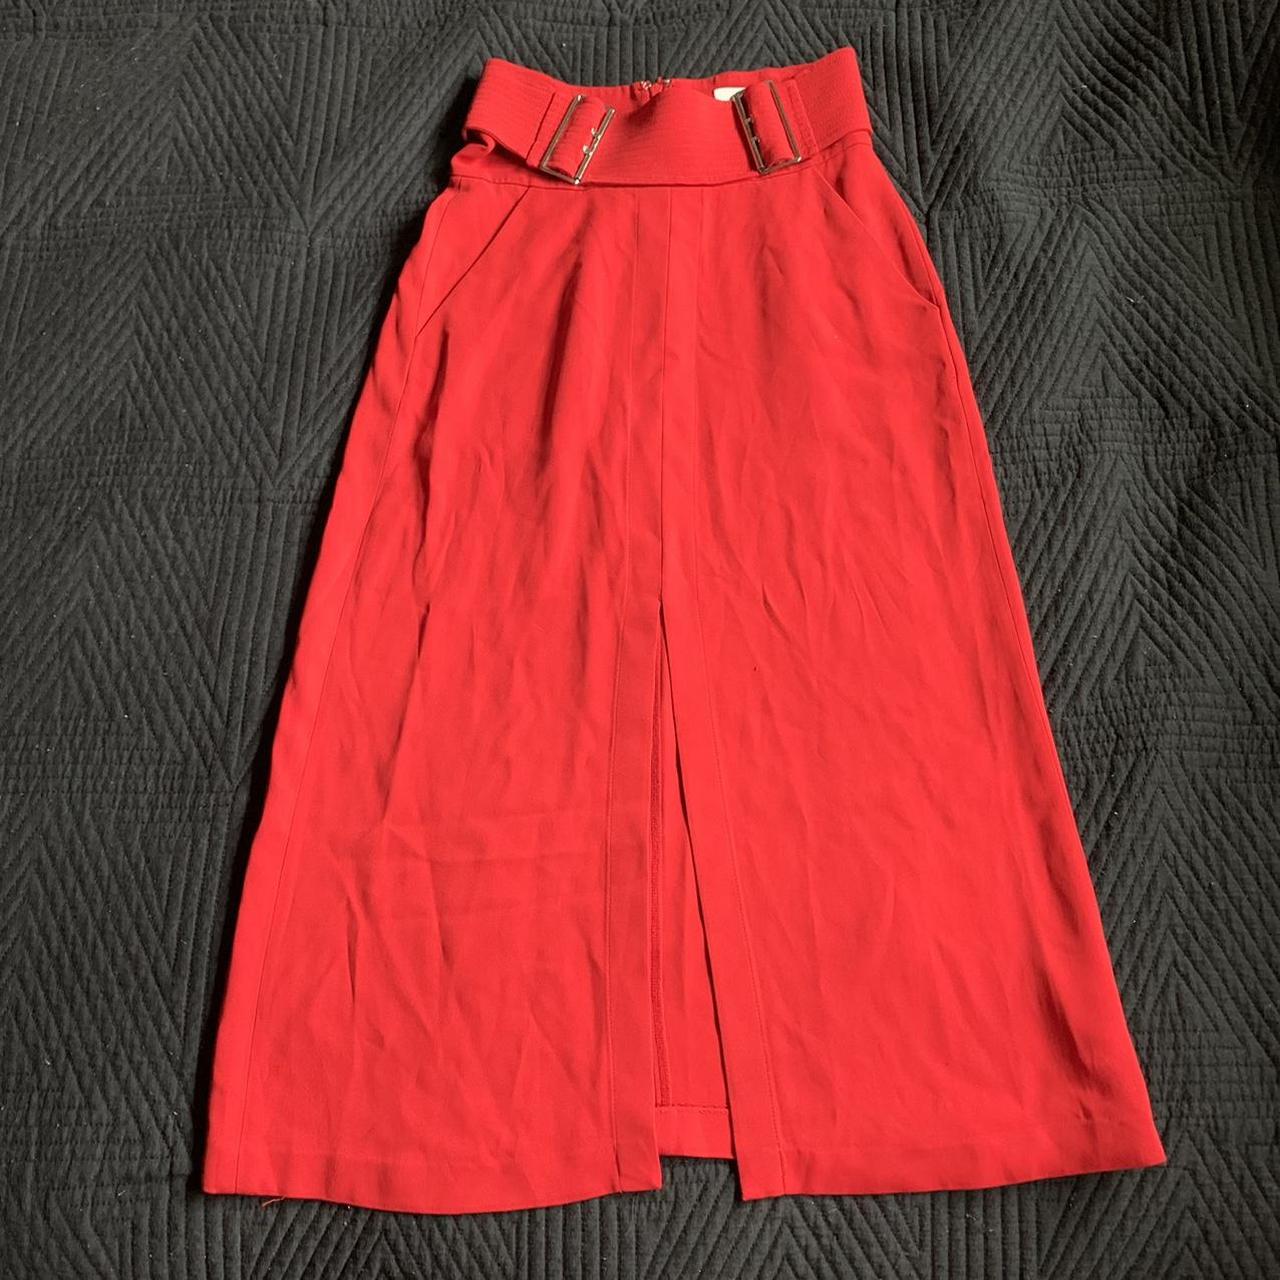 Product Image 1 - Red High Slit Midi Skirt

High